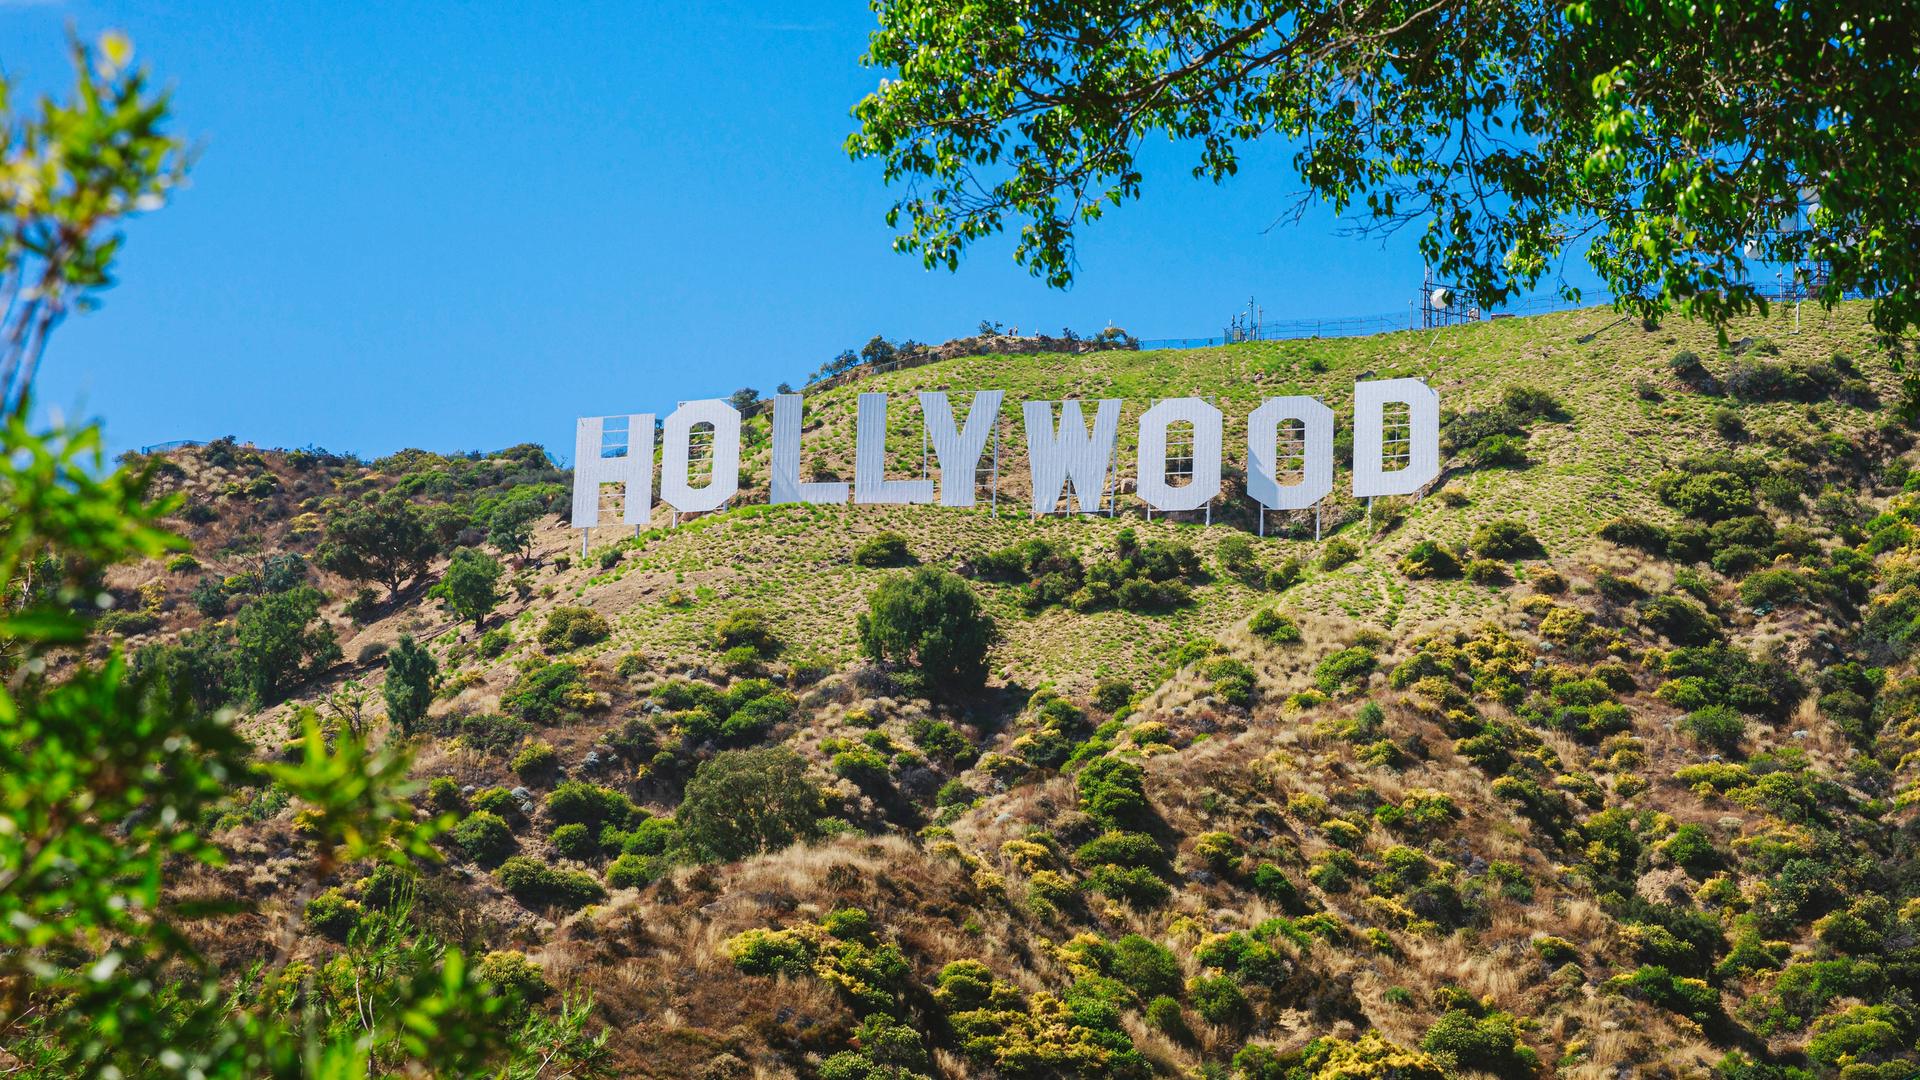 Der berühmte Schriftzug Hollywood auf dem Mount Lee in den St. Monica Hills.